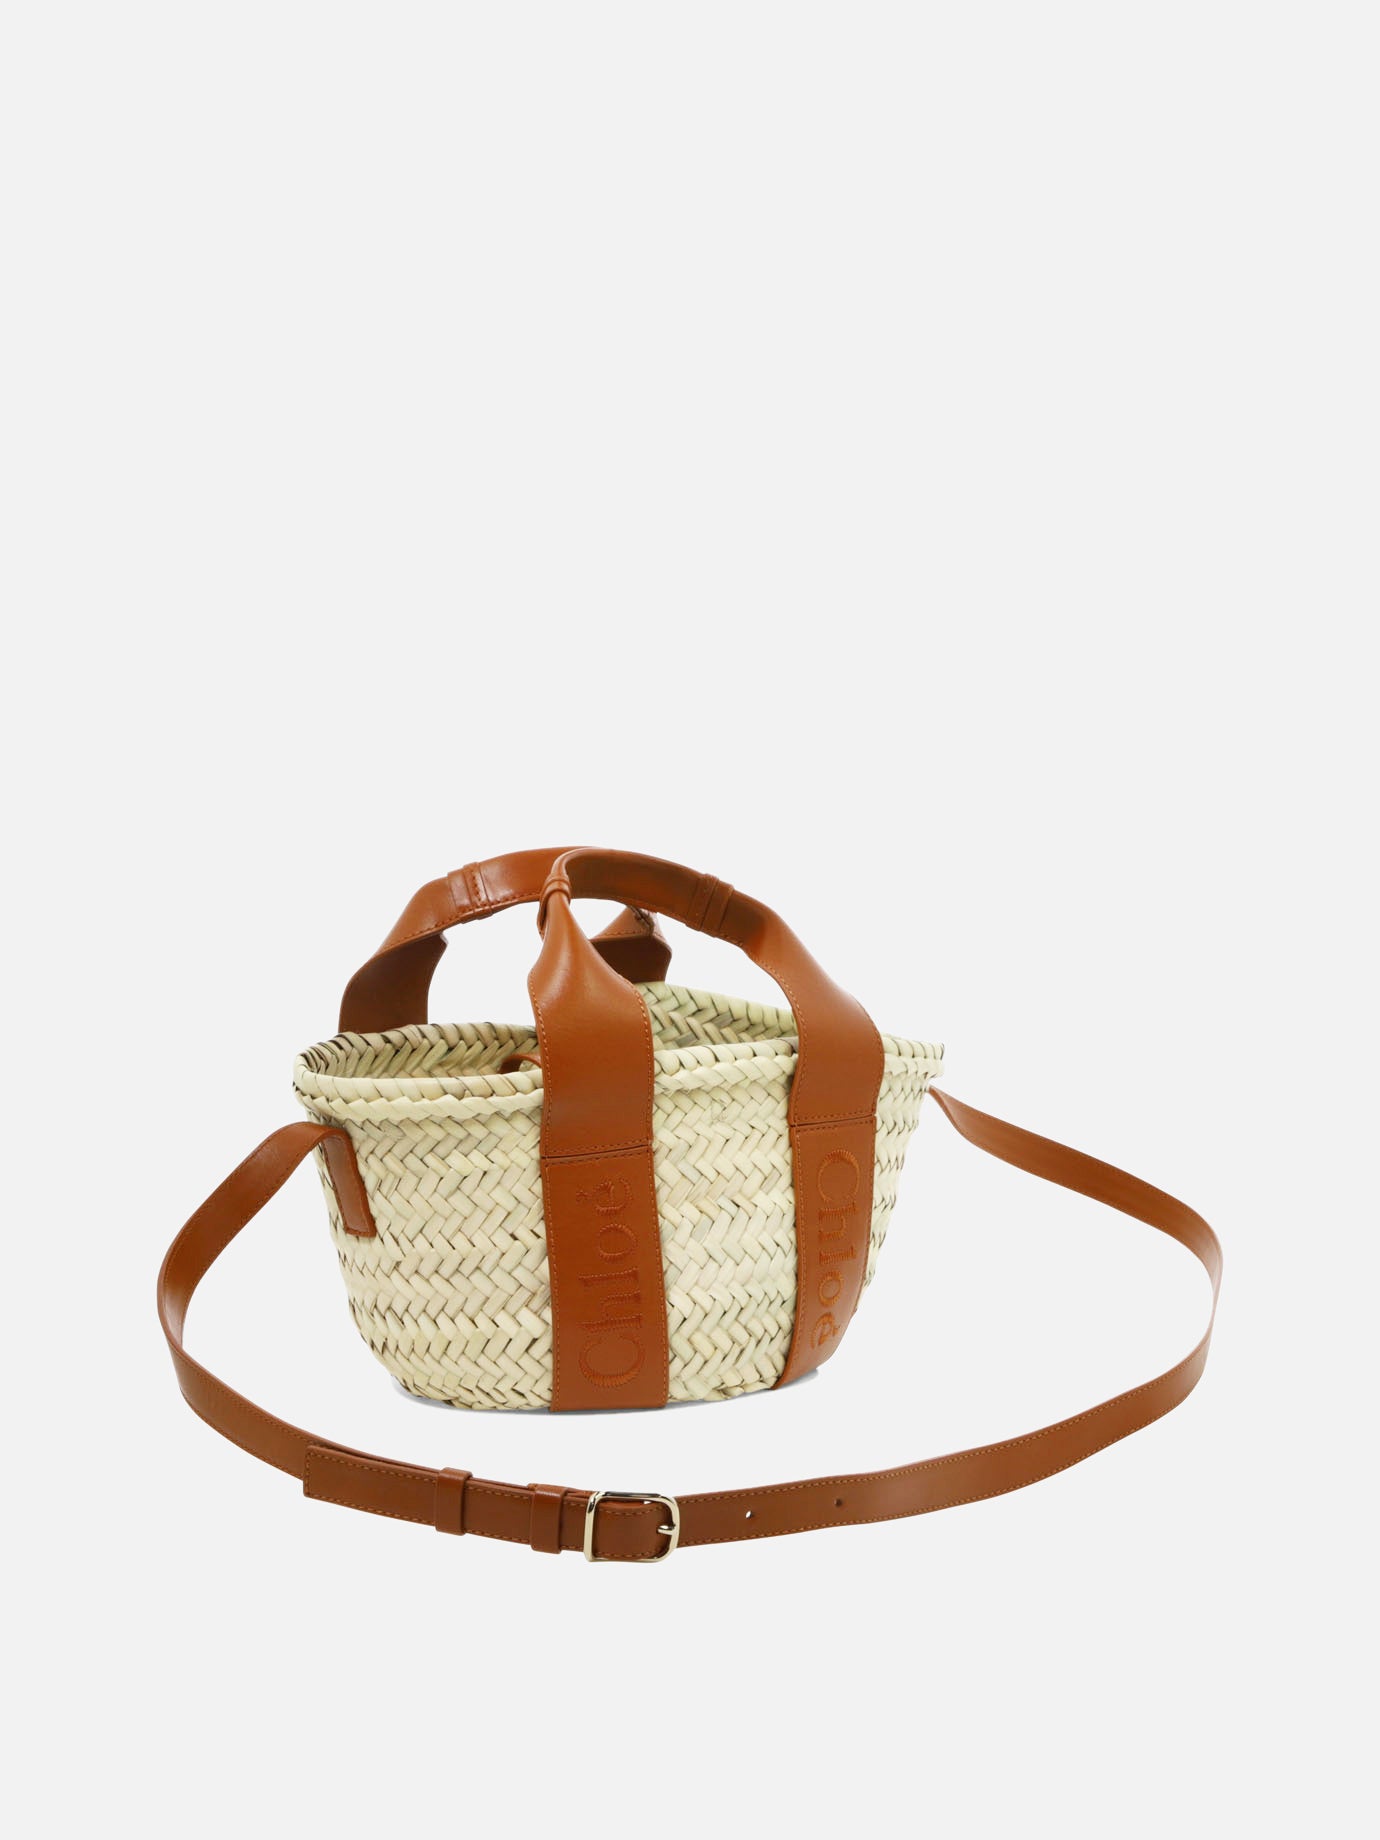 "Chloé Sense Small" handbag